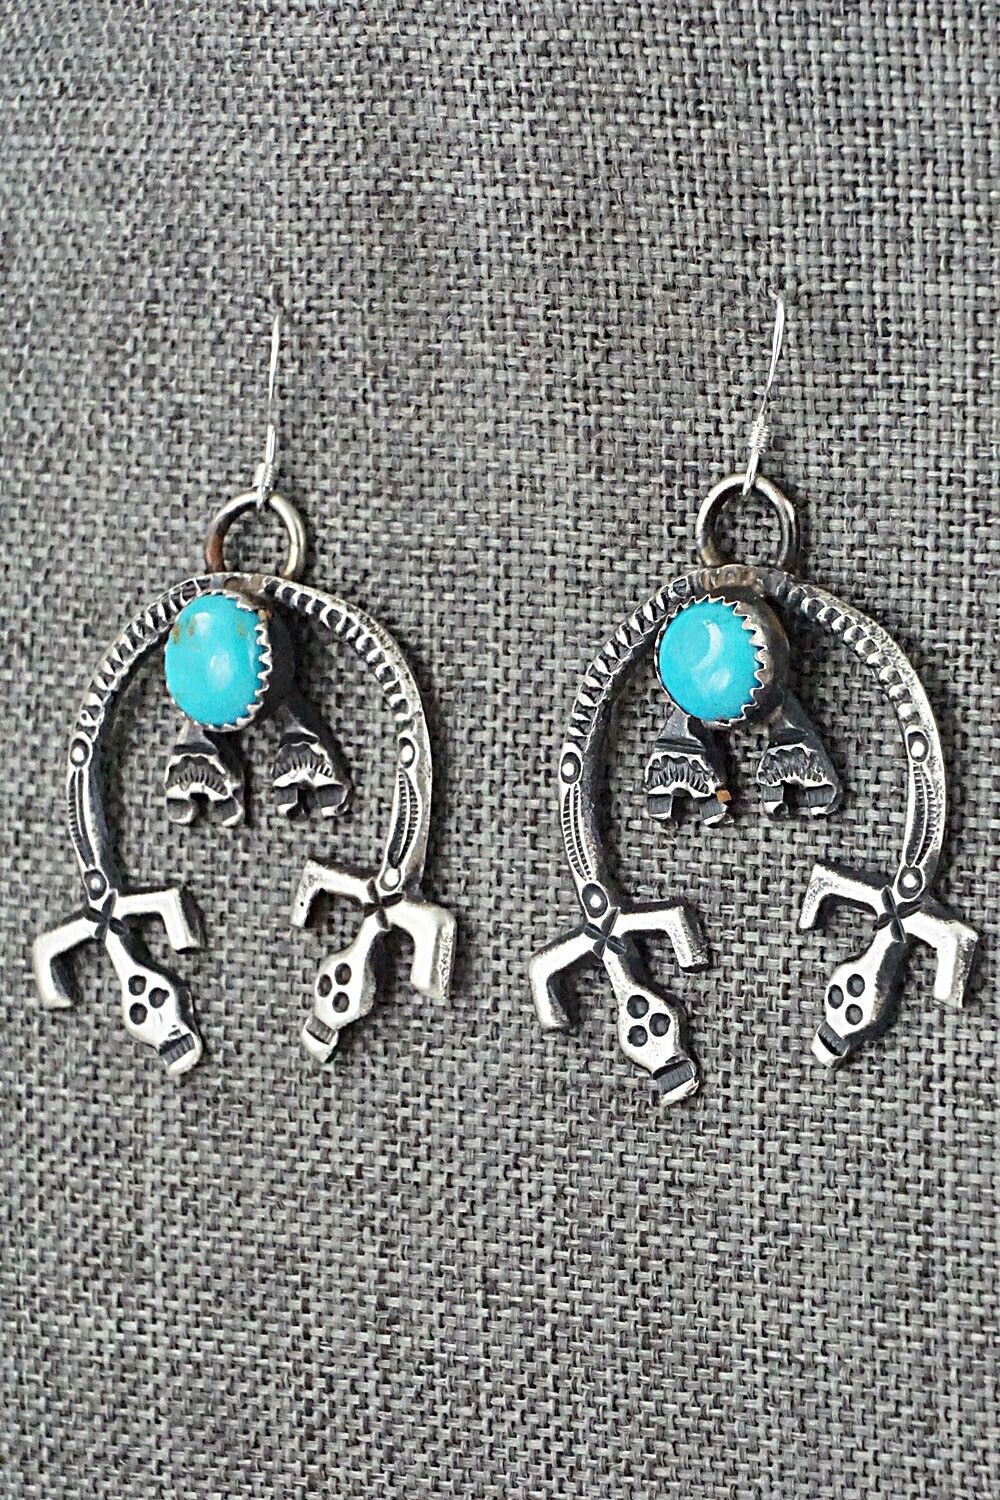 Turquoise & Sterling Silver Earrings - Eva & Linberg Billah